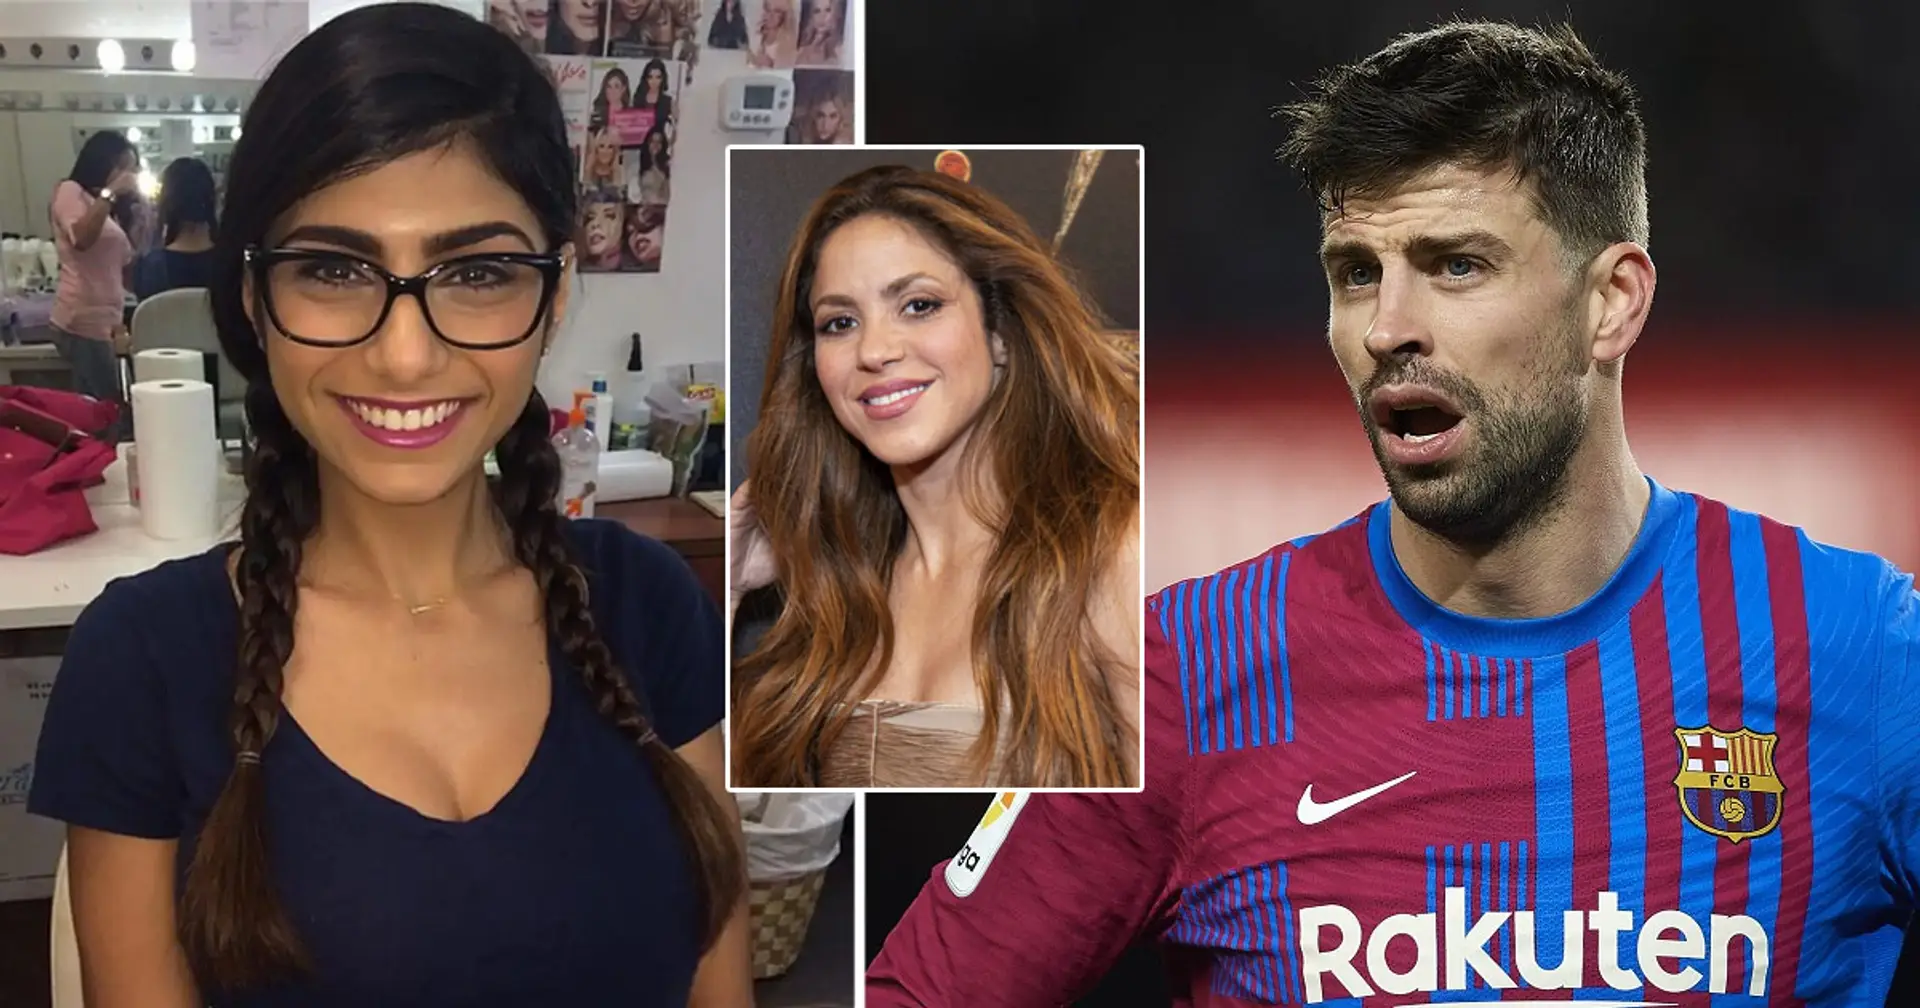 Xxx Mia Khalifa Photo - Piqueâ€¦. Feminism': Former porn star Mia Khalifa reacts to Shakira's  Instagram activity after break-up - Football | Tribuna.com